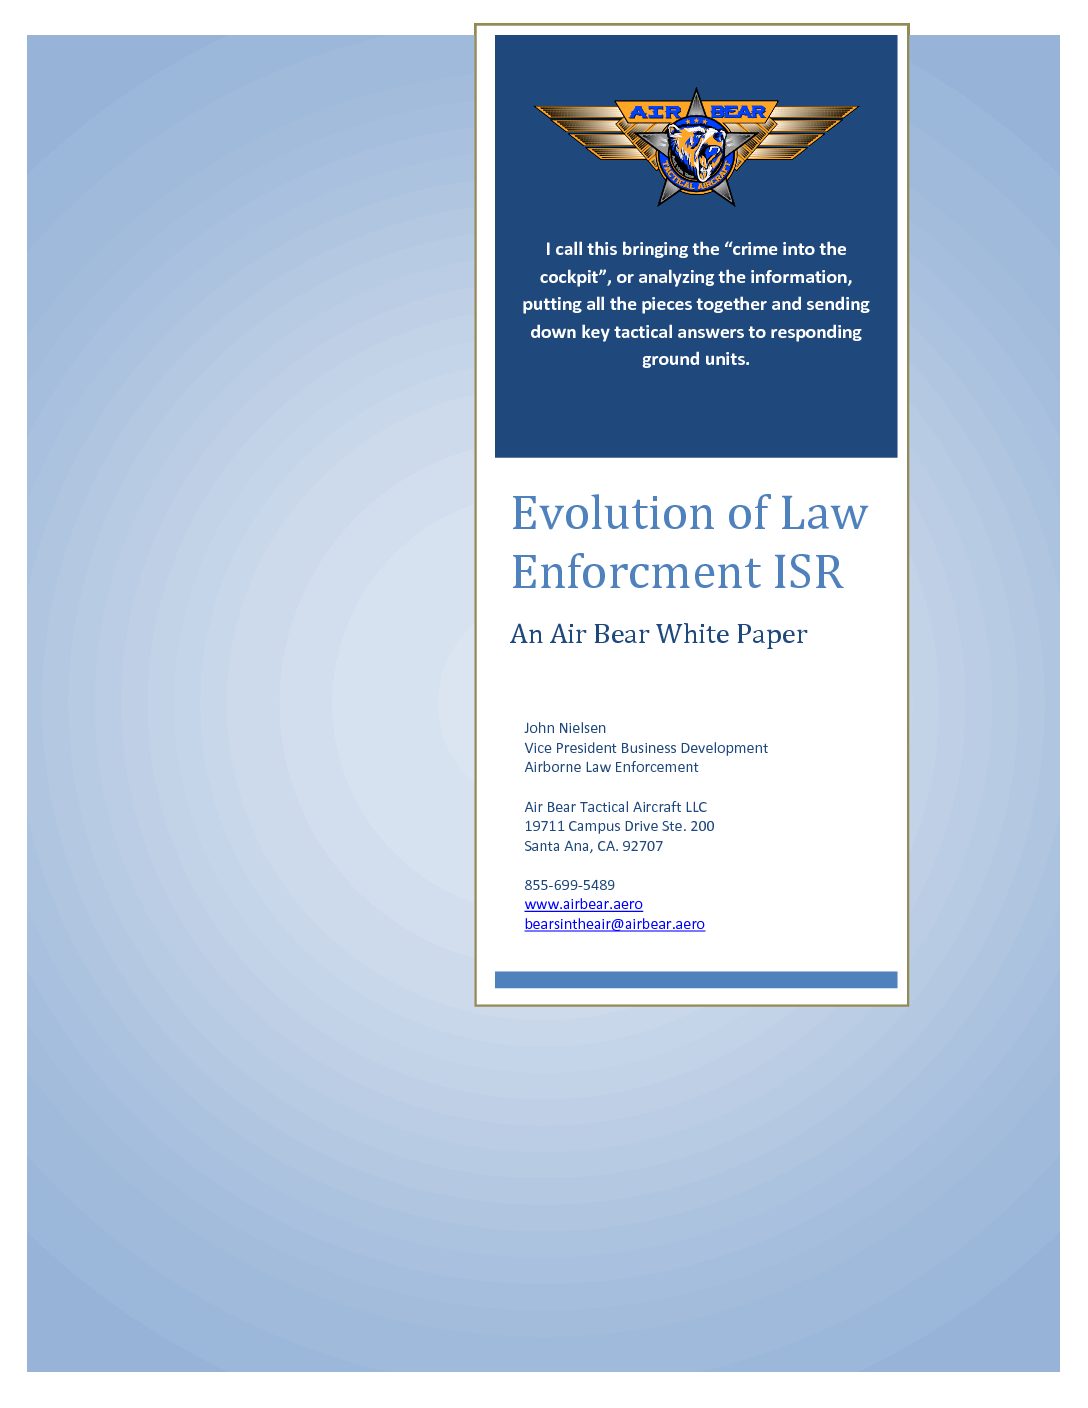 Evolution of Law Enforcement ISR